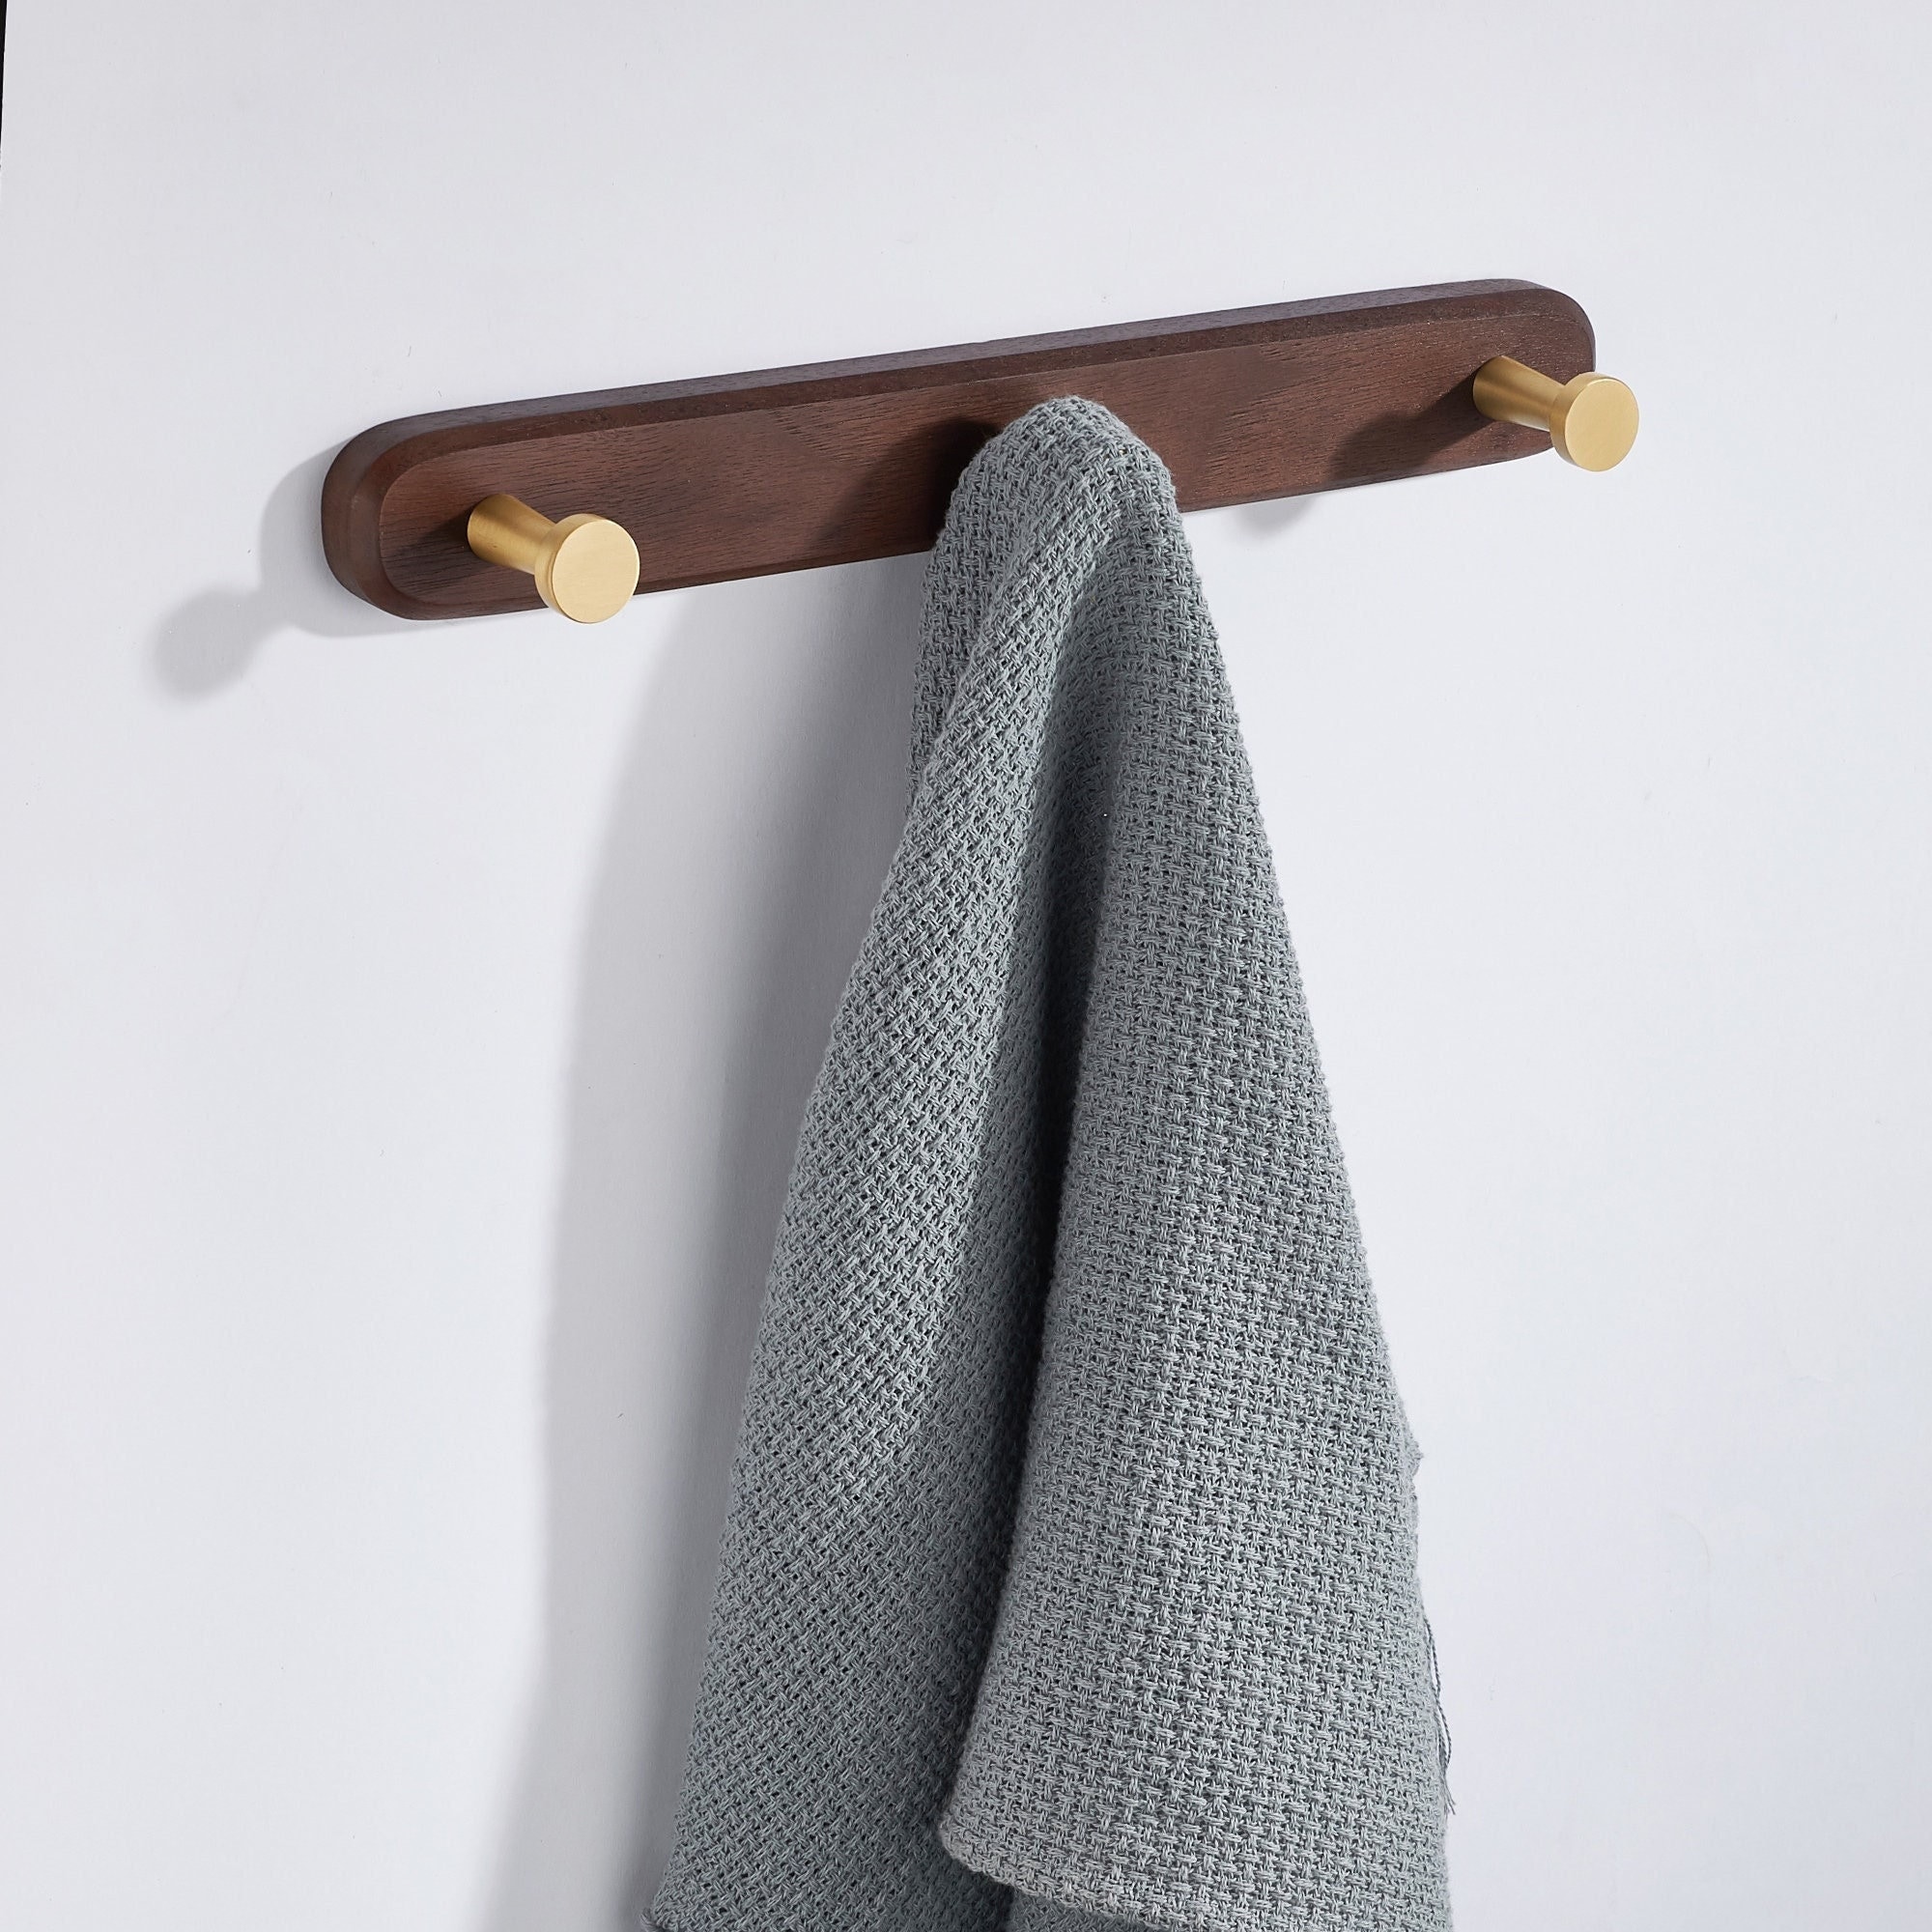 Robe & Towel Hook Walnut Cherry Oak Bathroom Accessories 